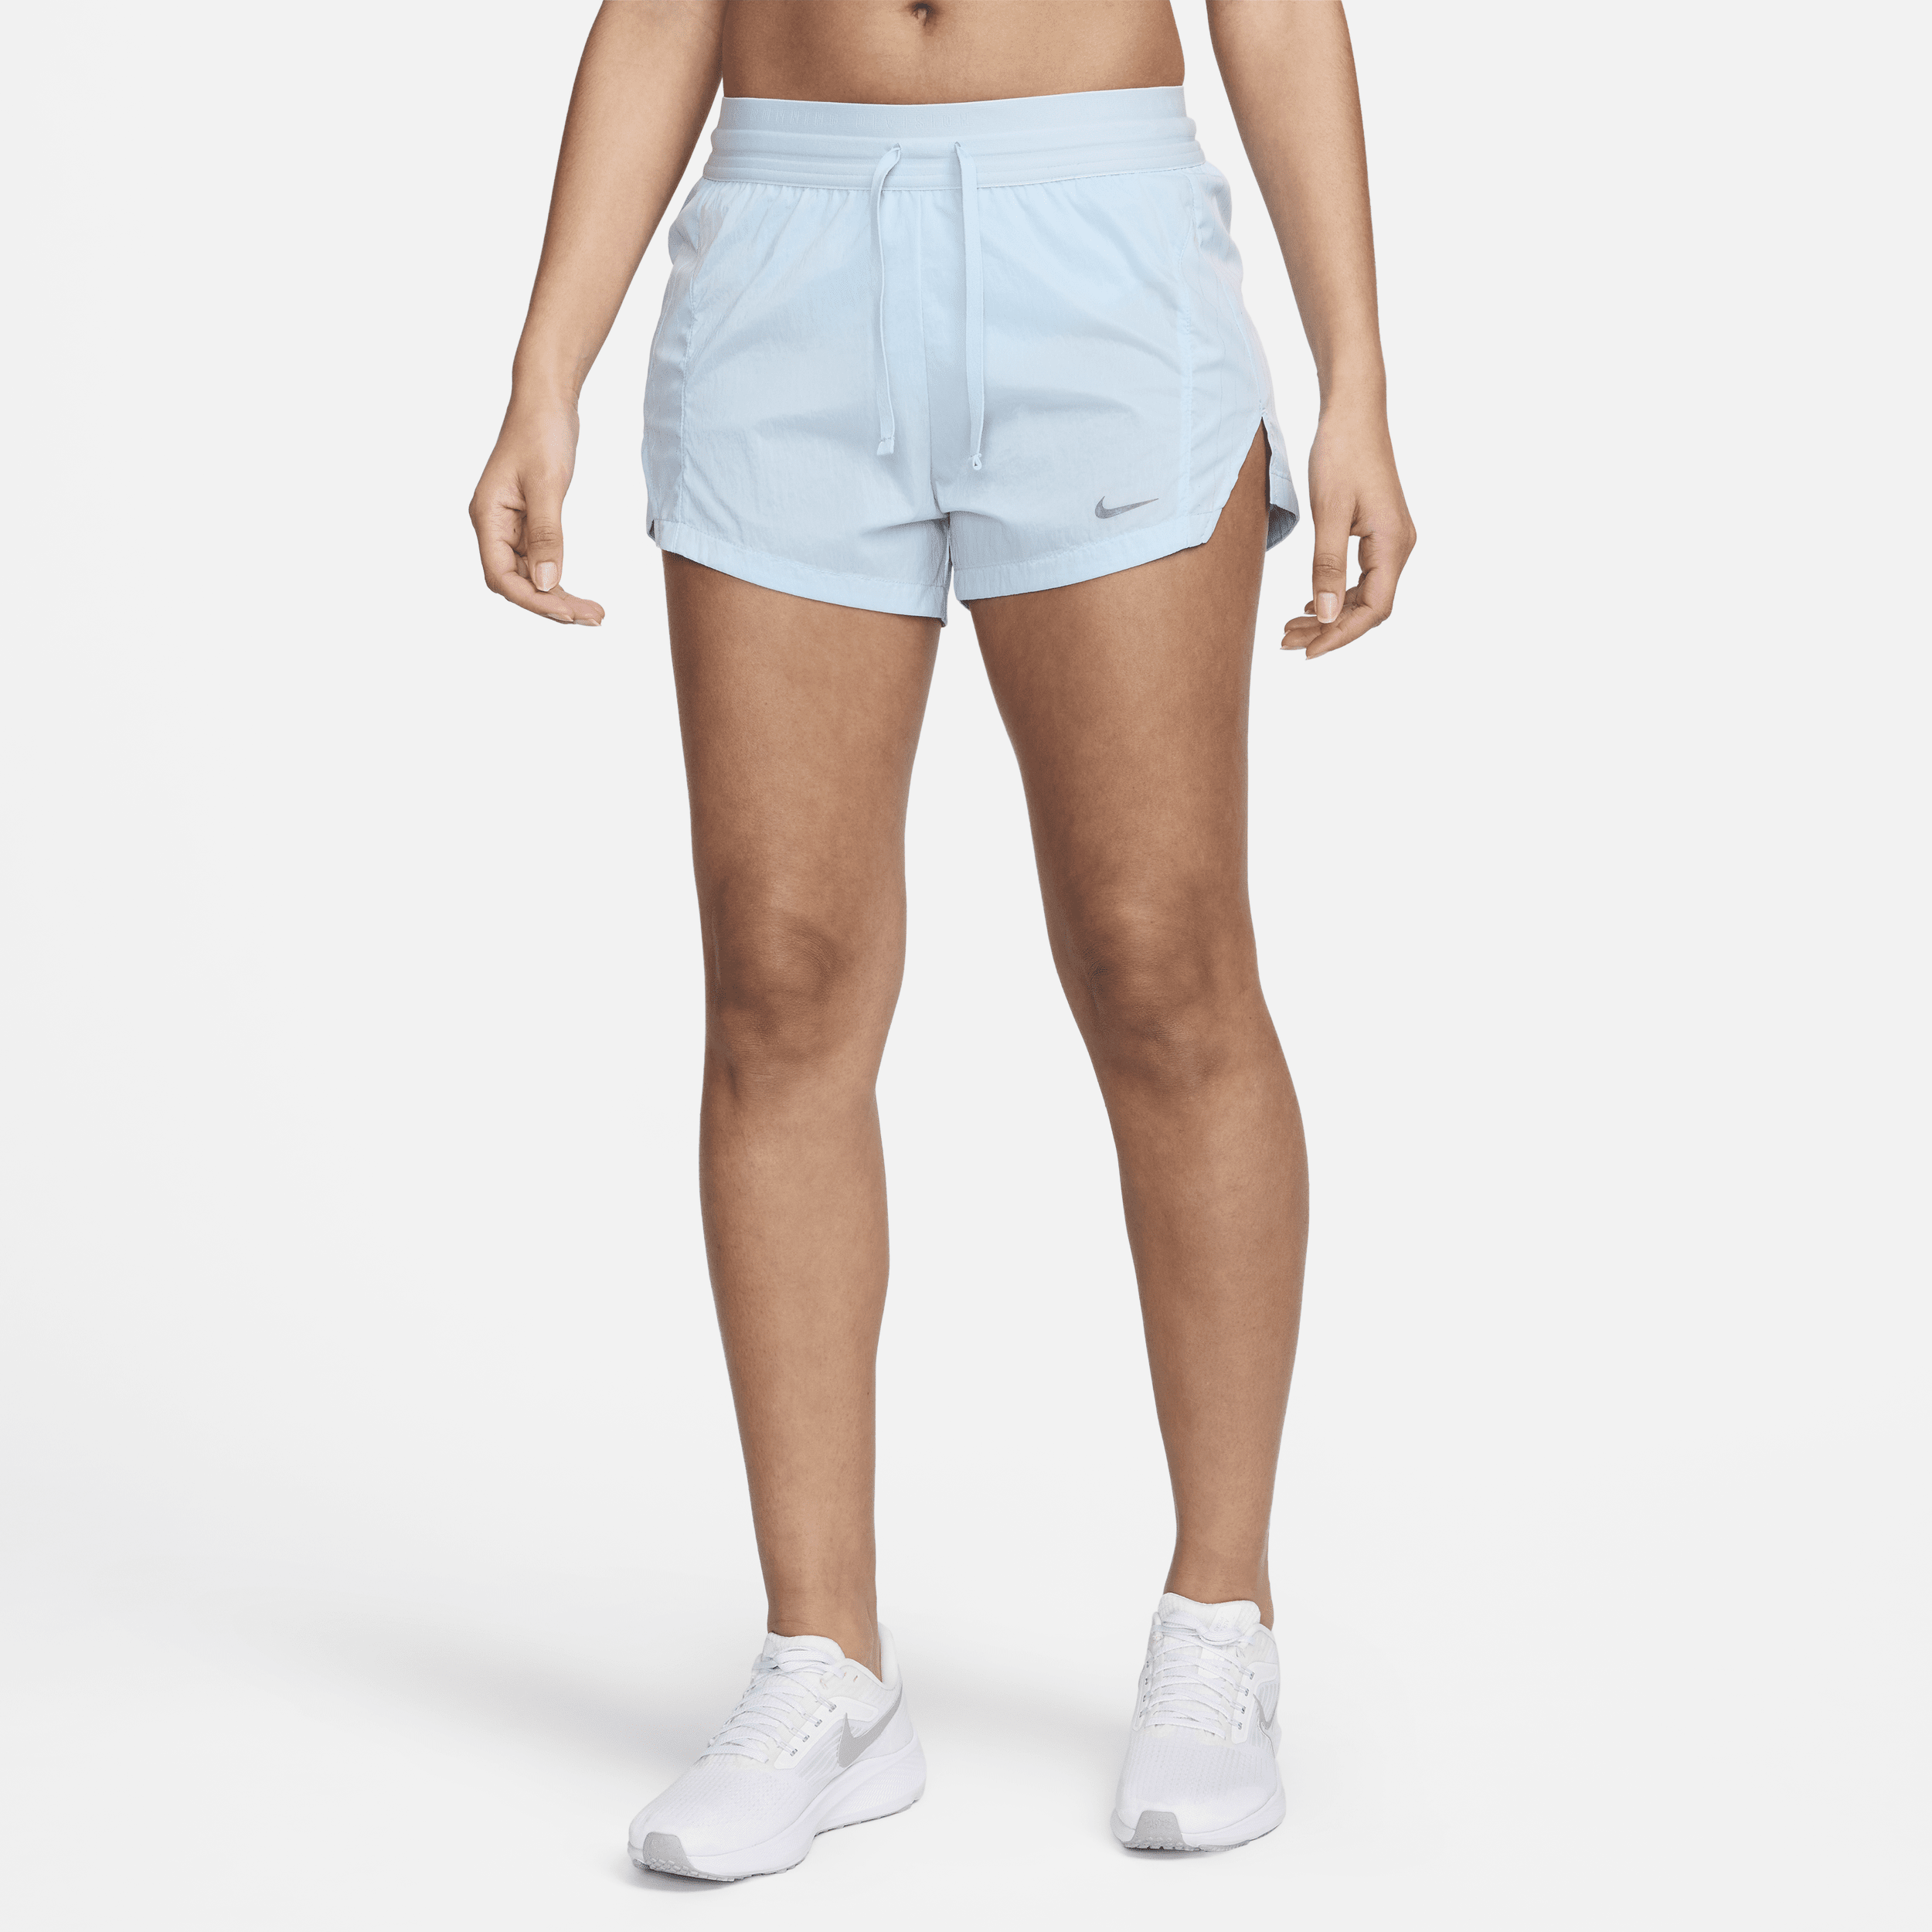 Nike Running Division hardloopshorts met halfhoge taille en binnenbroekje voor dames (8 cm) - Blauw